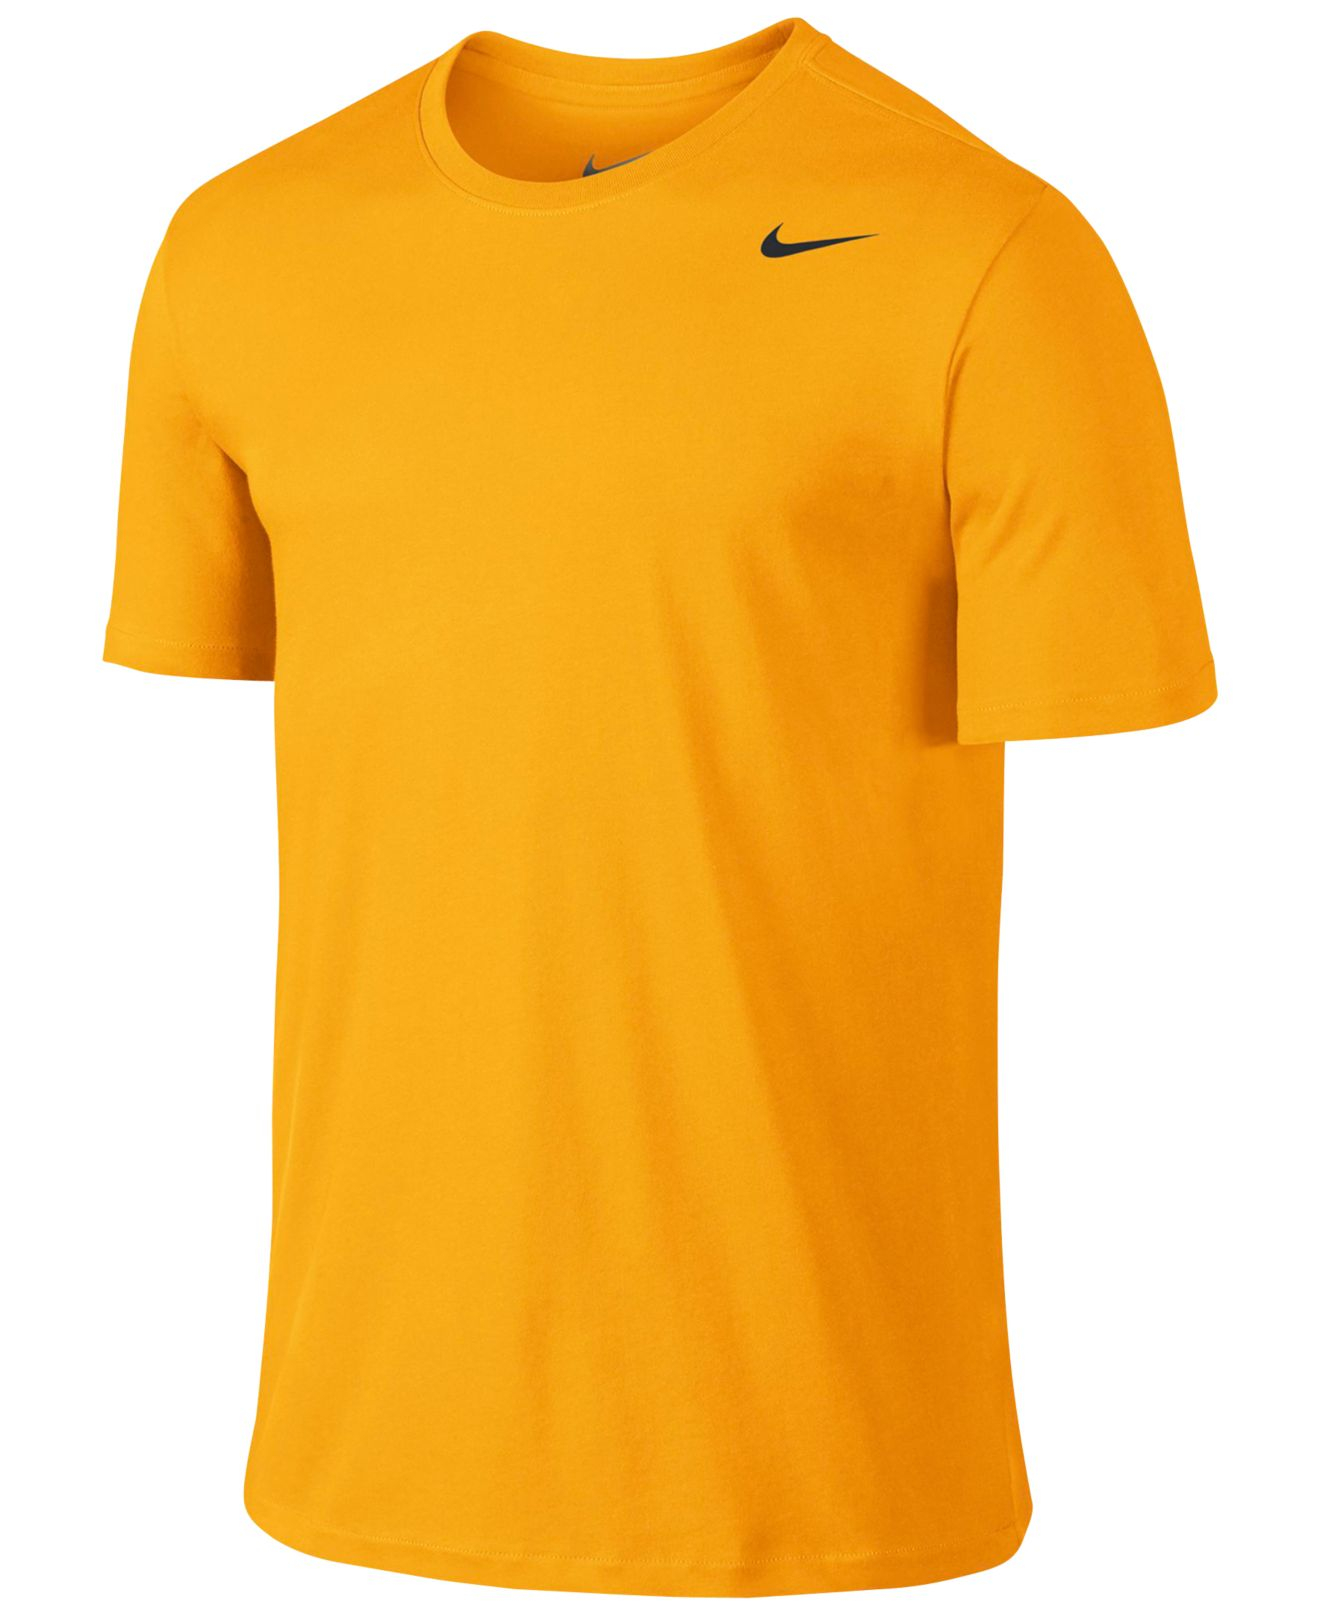 Nike Dri-fit Cotton Short-sleeve 2.0 in University Gold/Black (Yellow ...